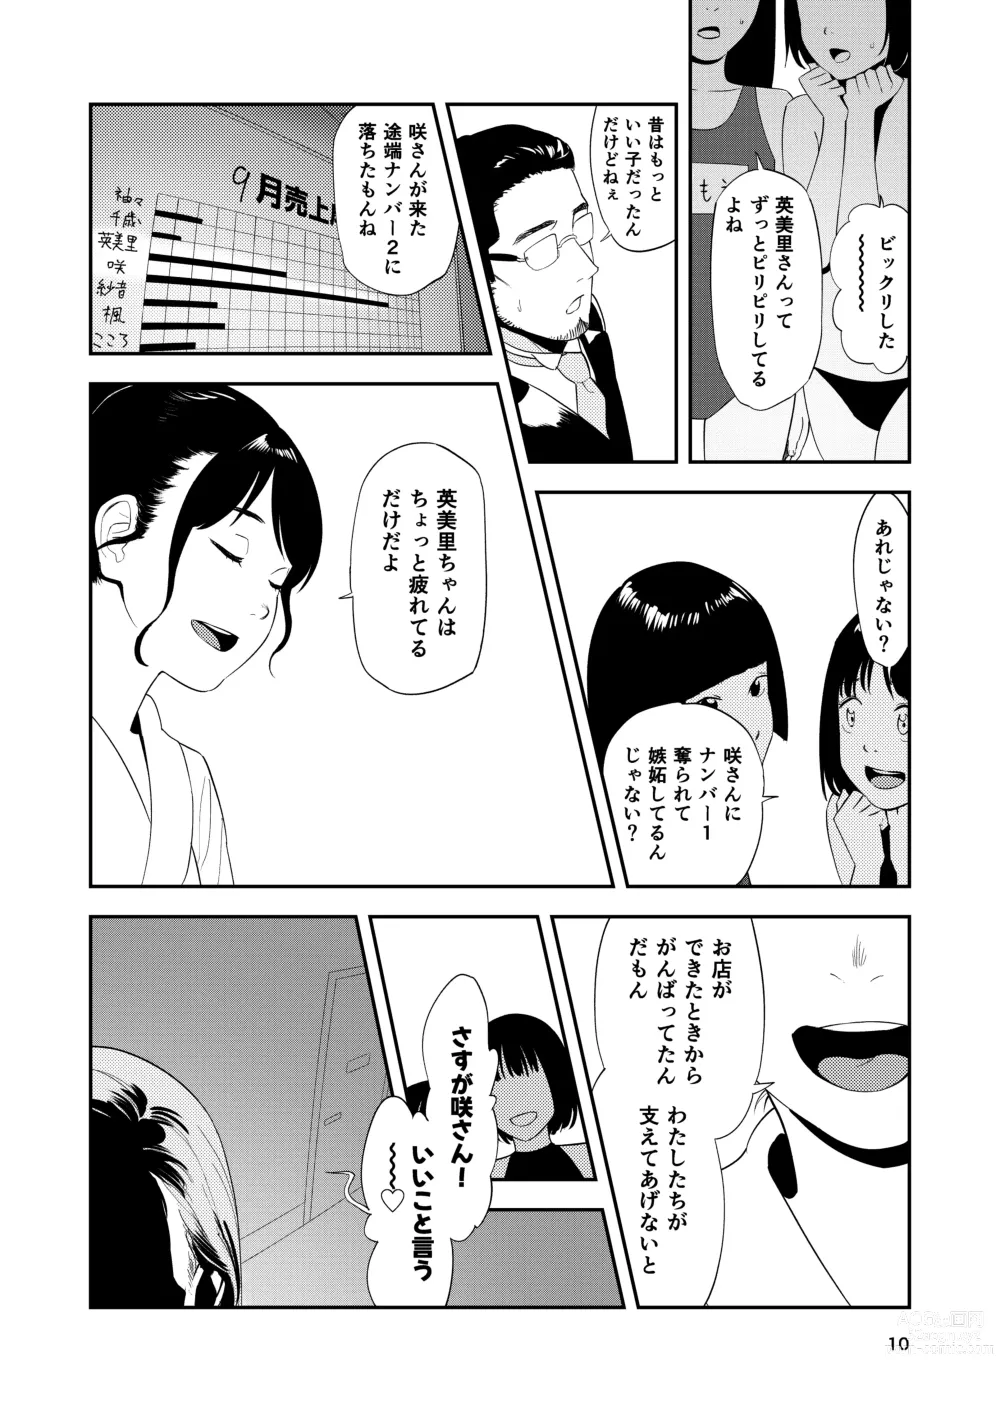 Page 10 of doujinshi LOLITA COMPLEX